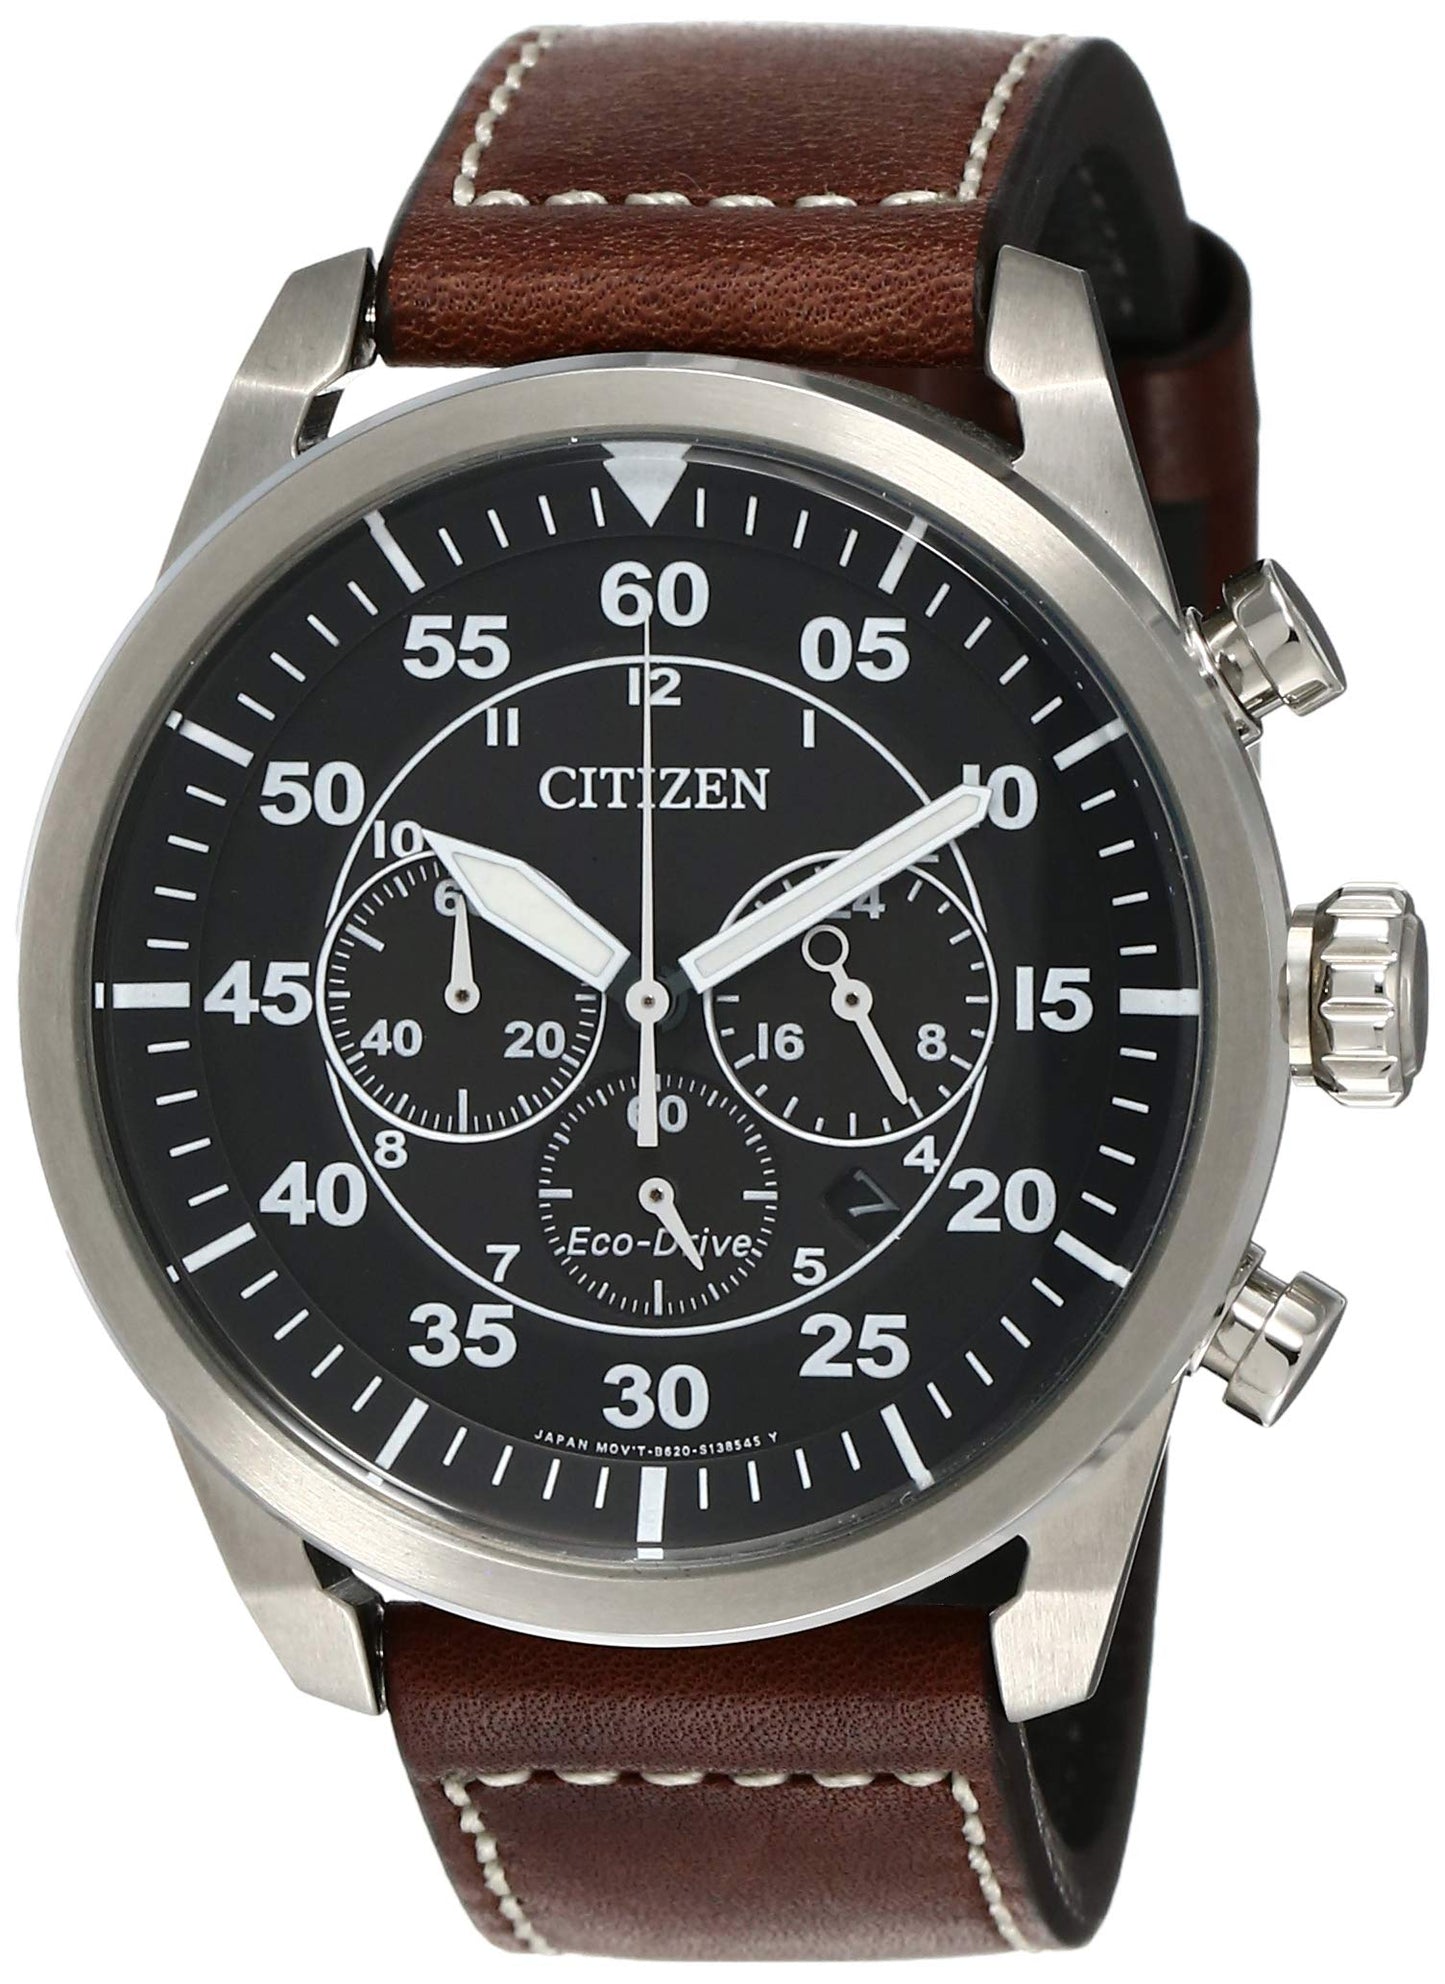 Citizen Herren Chronograph Quarz Uhr mit Leder Armband CA4210-16E